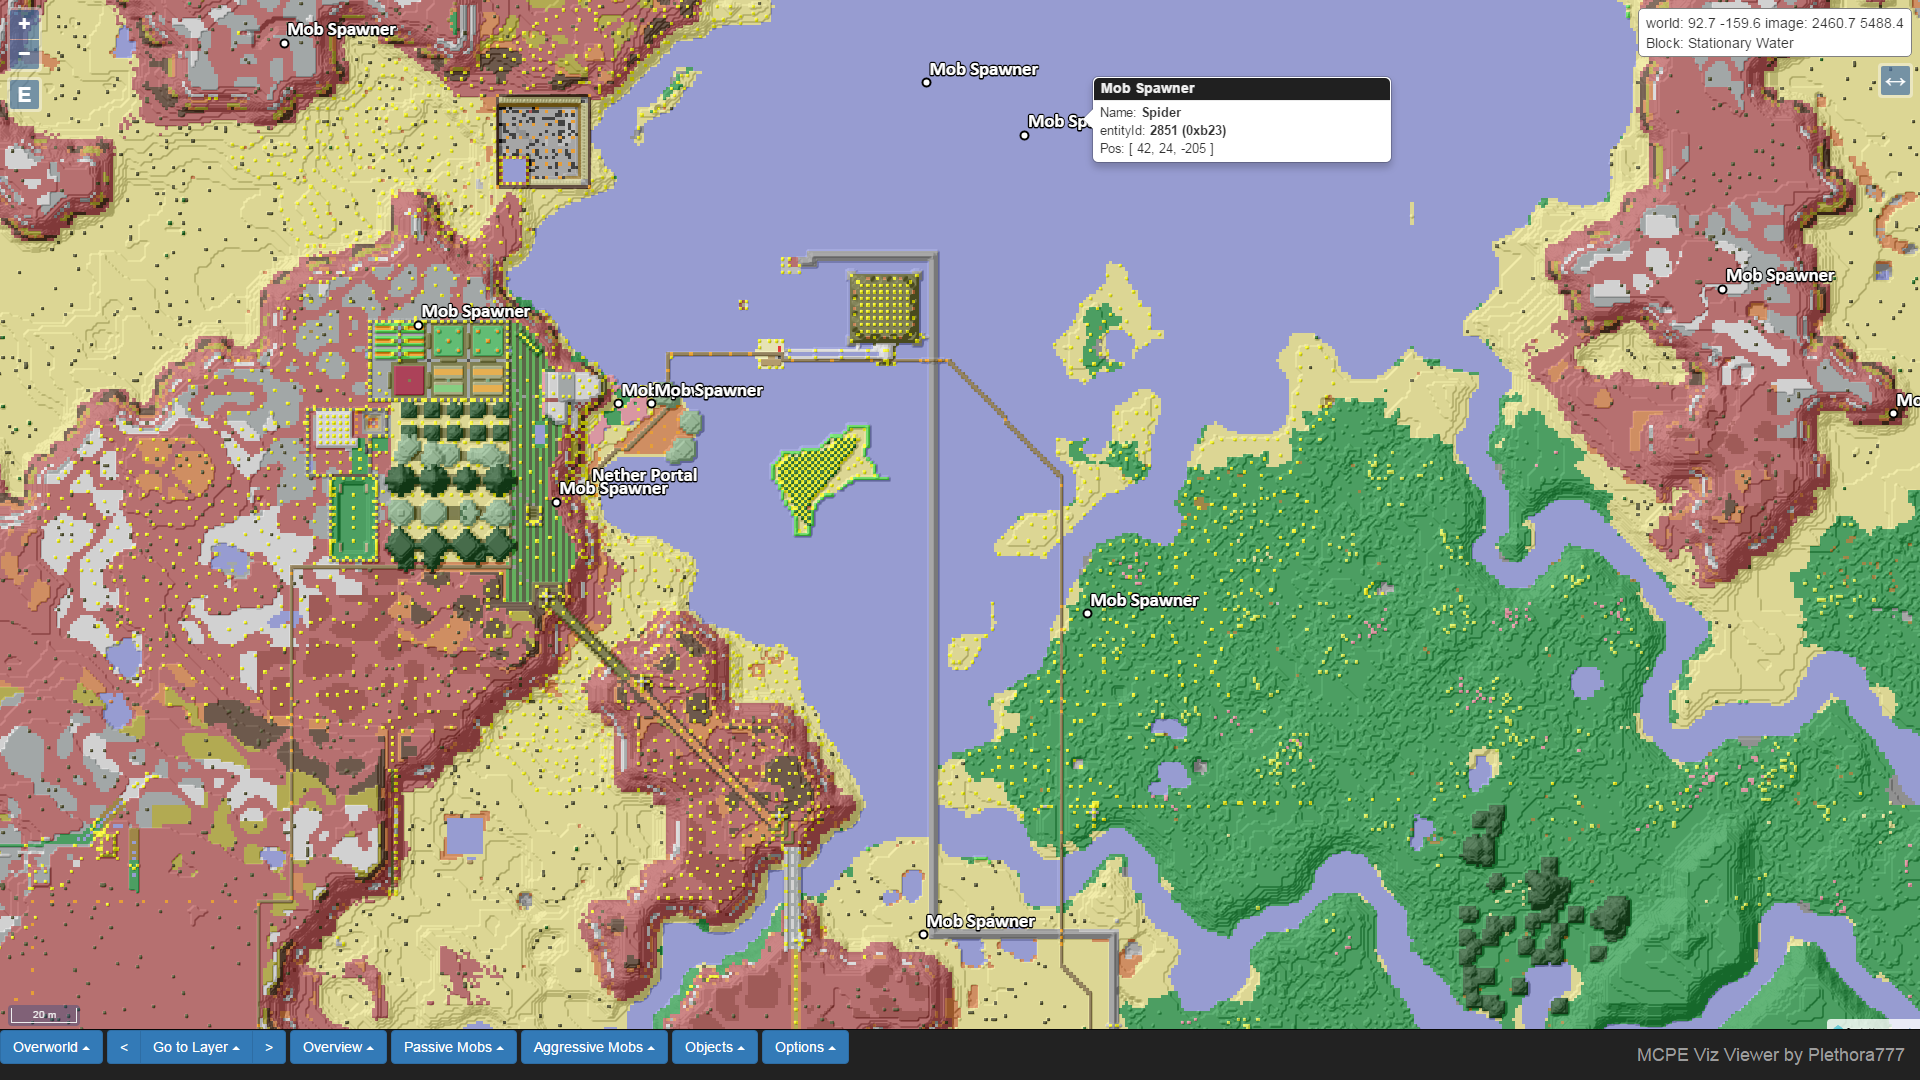 minecraft bedrock custom maps not working with universal minecraft editor